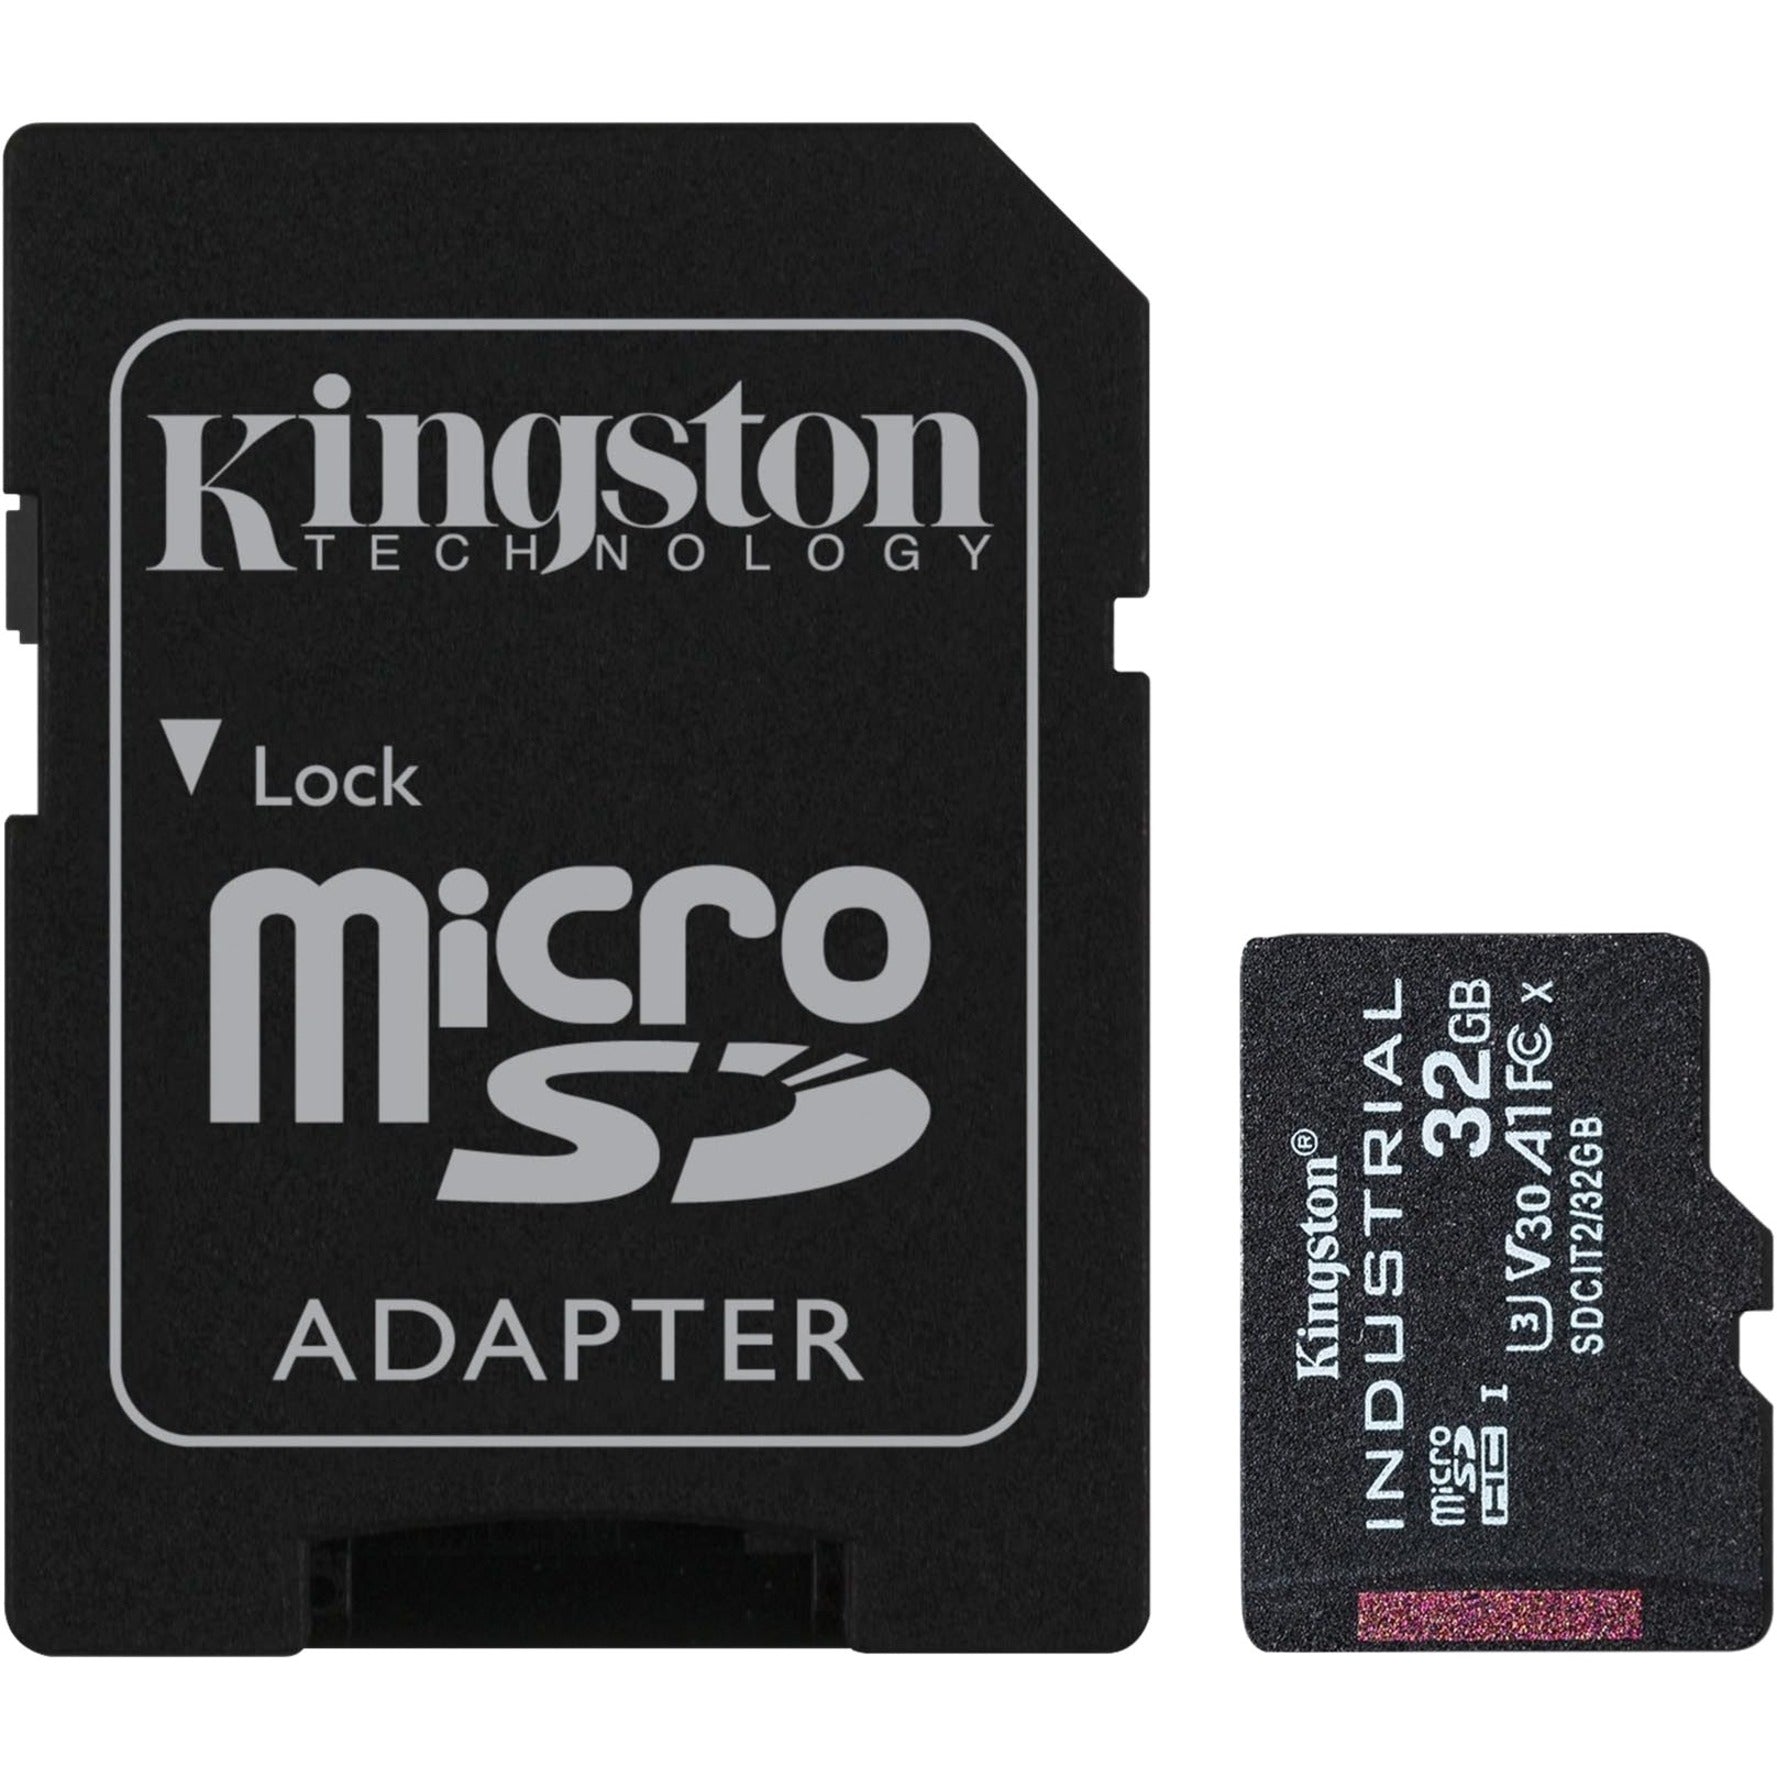 Kingston SDCIT2/32GB Industrial 32GB microSDHC Card, V30, Class 10/UHS-I (U3), 100 MB/s Data Transfer Rate